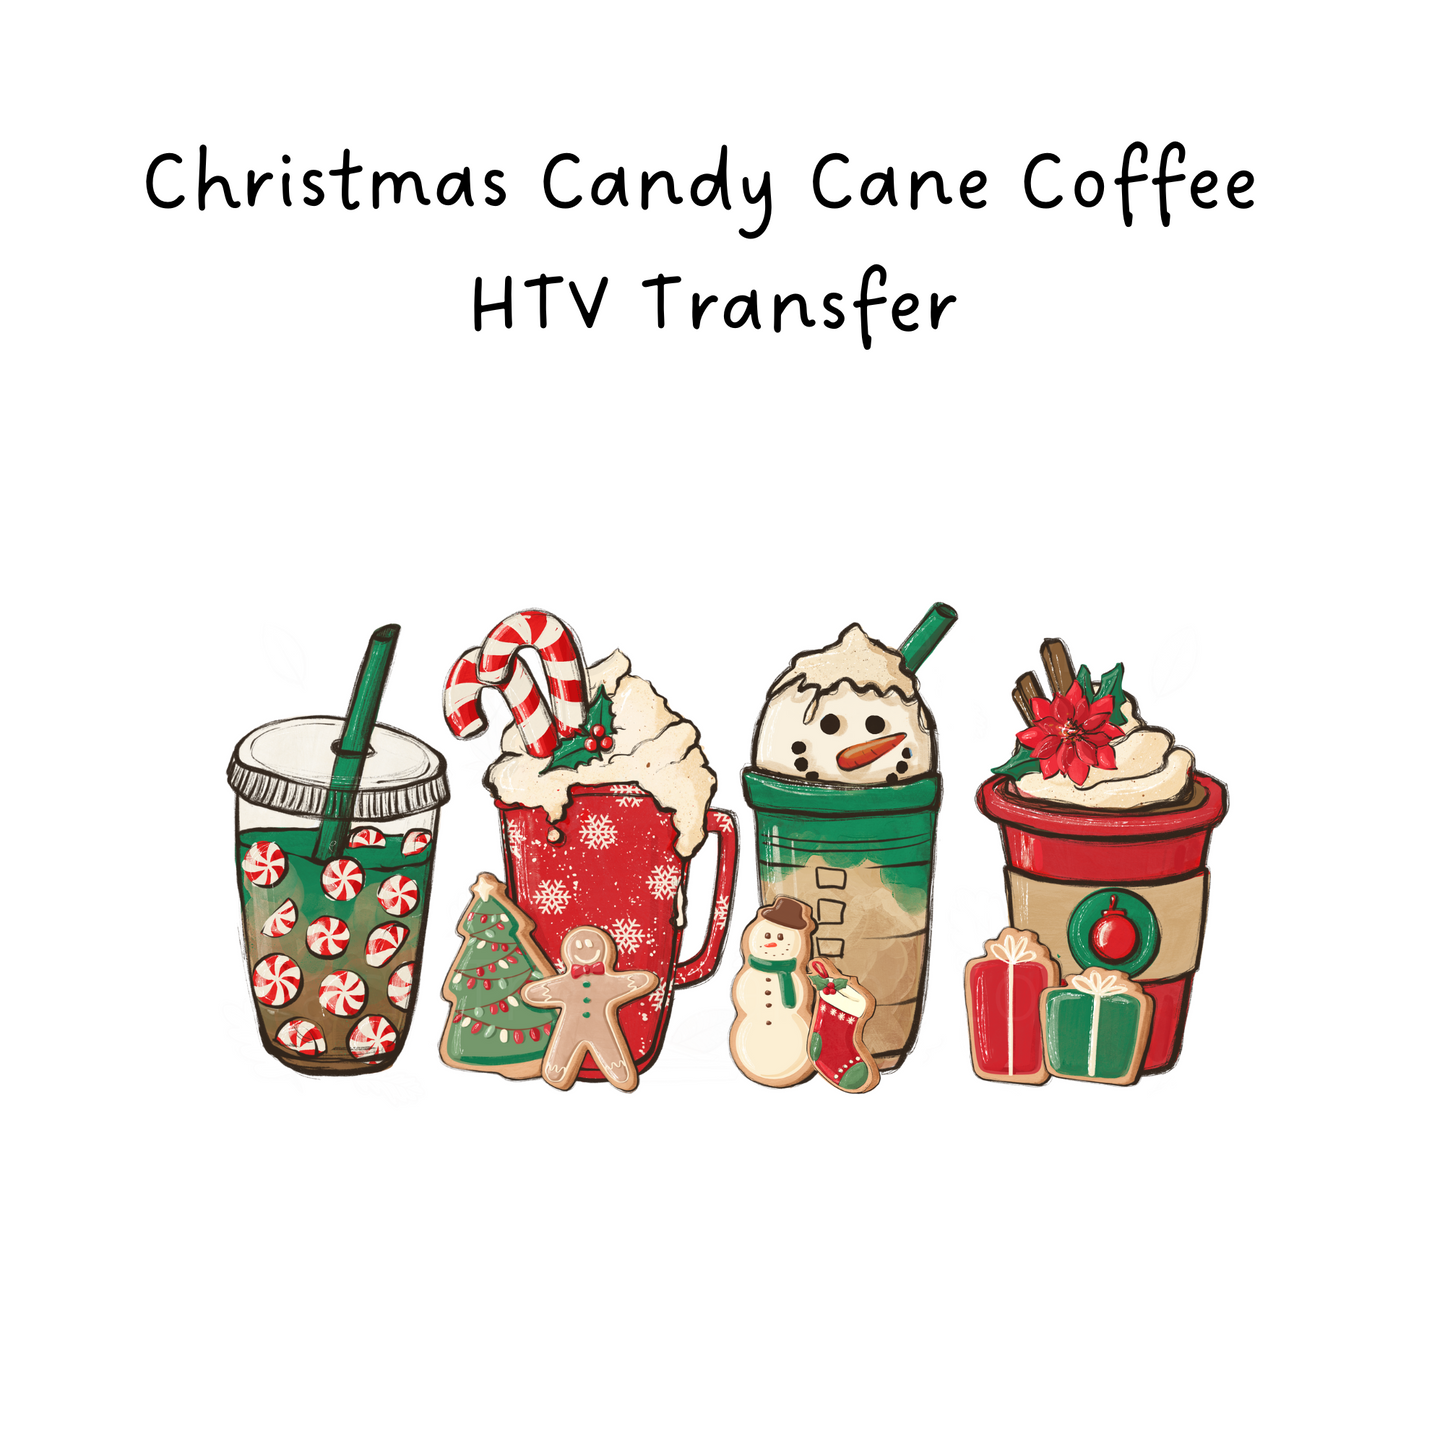 Christmas Candy Cane Coffee HTV Transfer